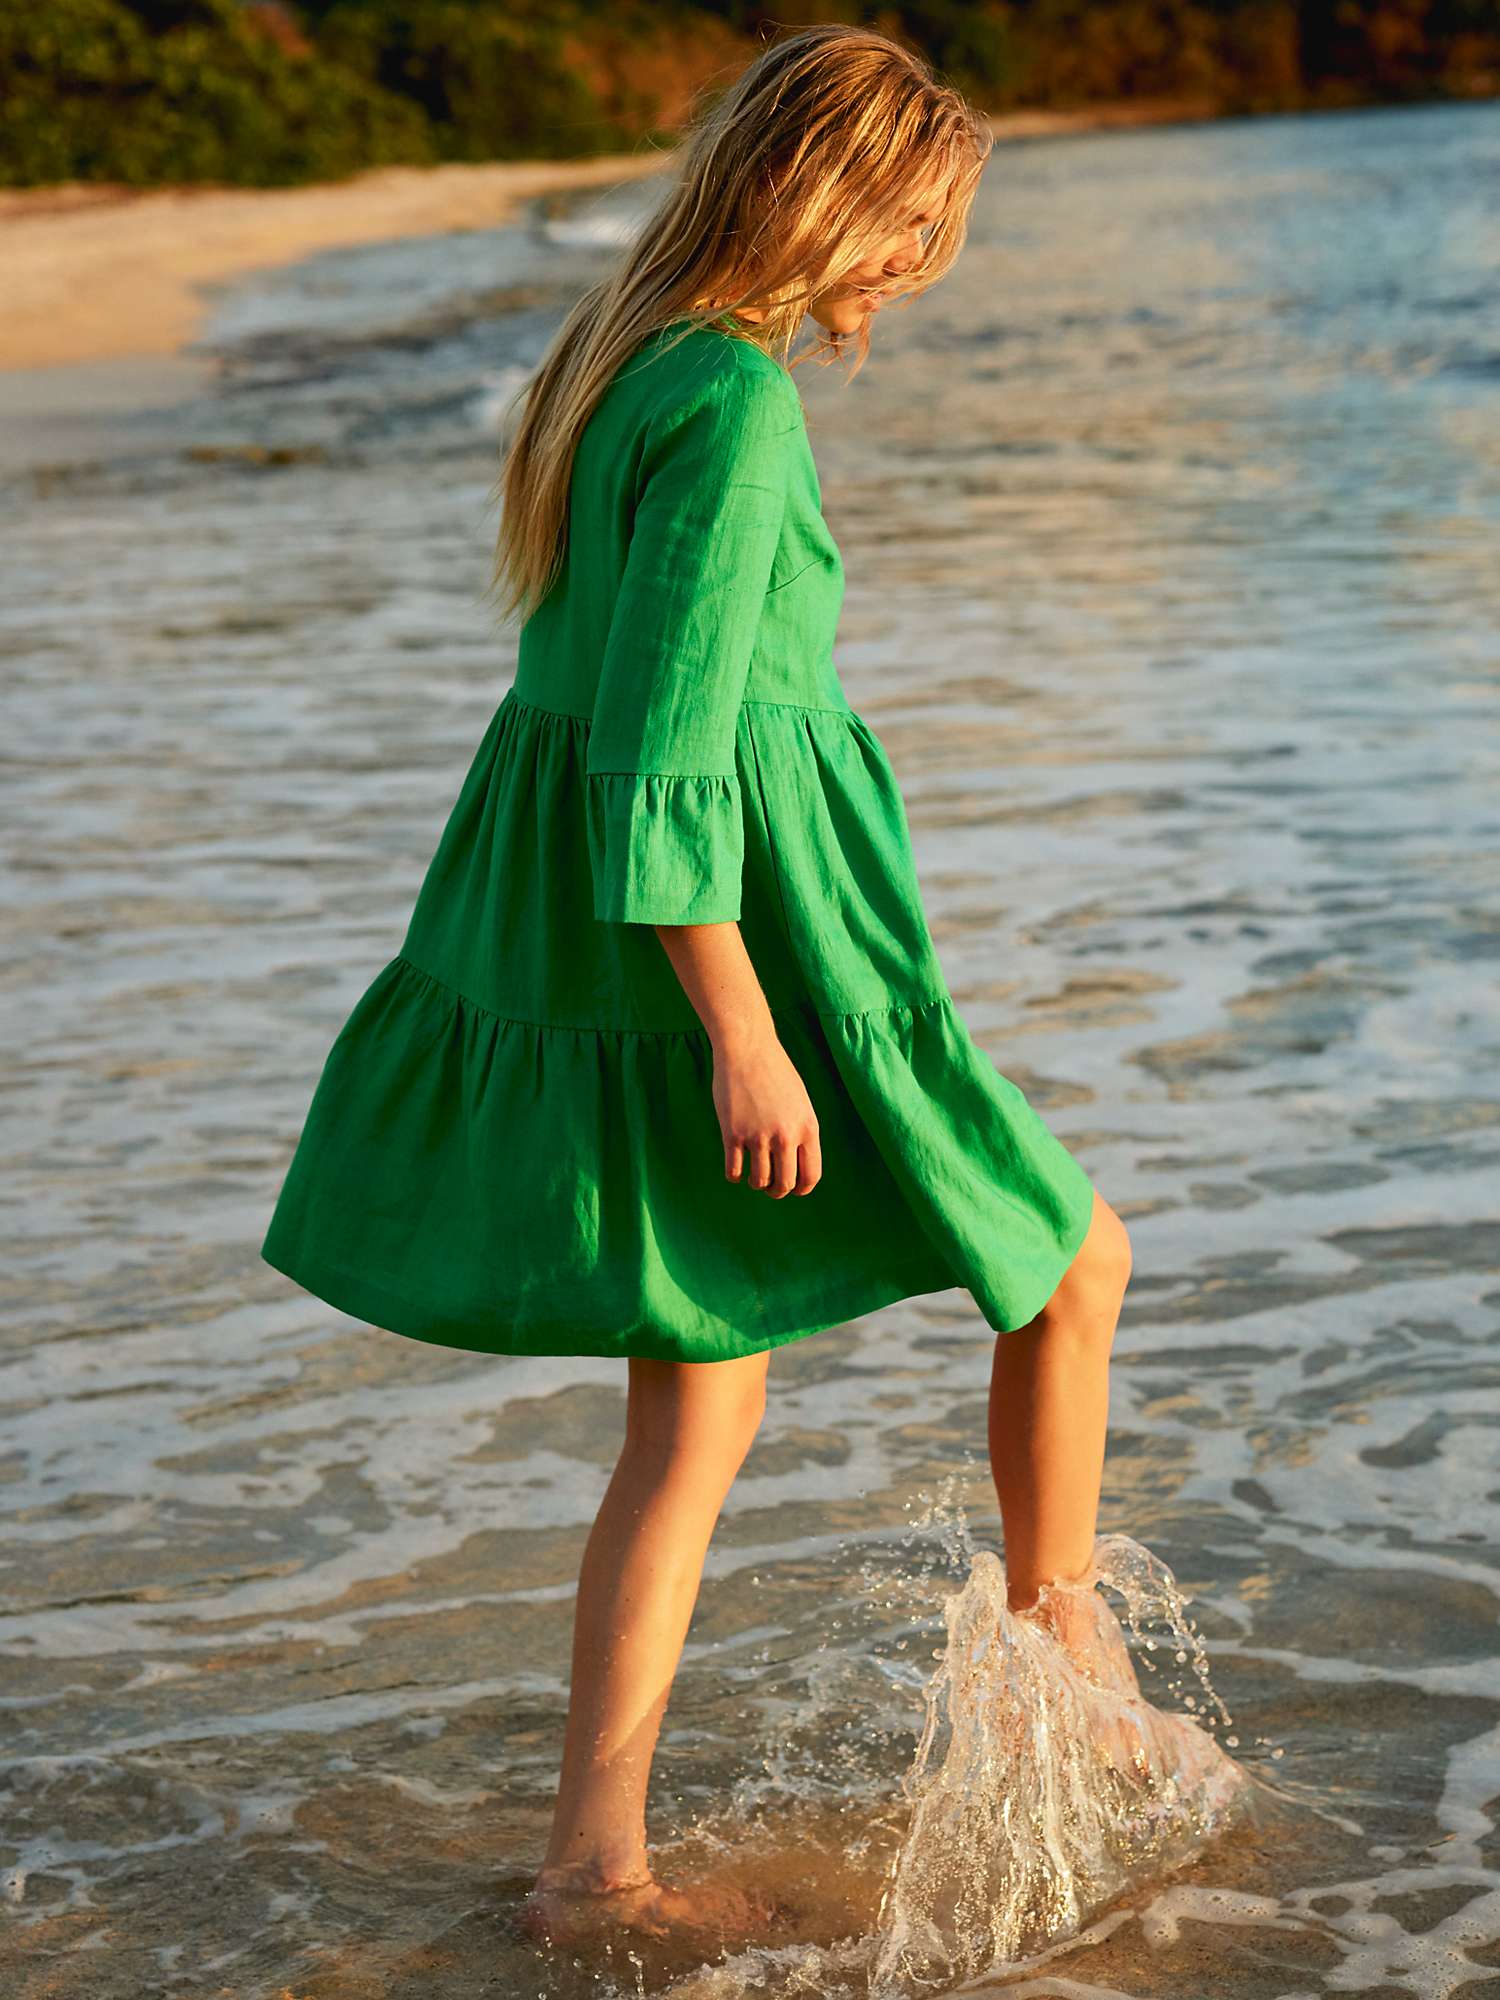 Buy Boden Sophia Tiered Linen Mini Dress Online at johnlewis.com